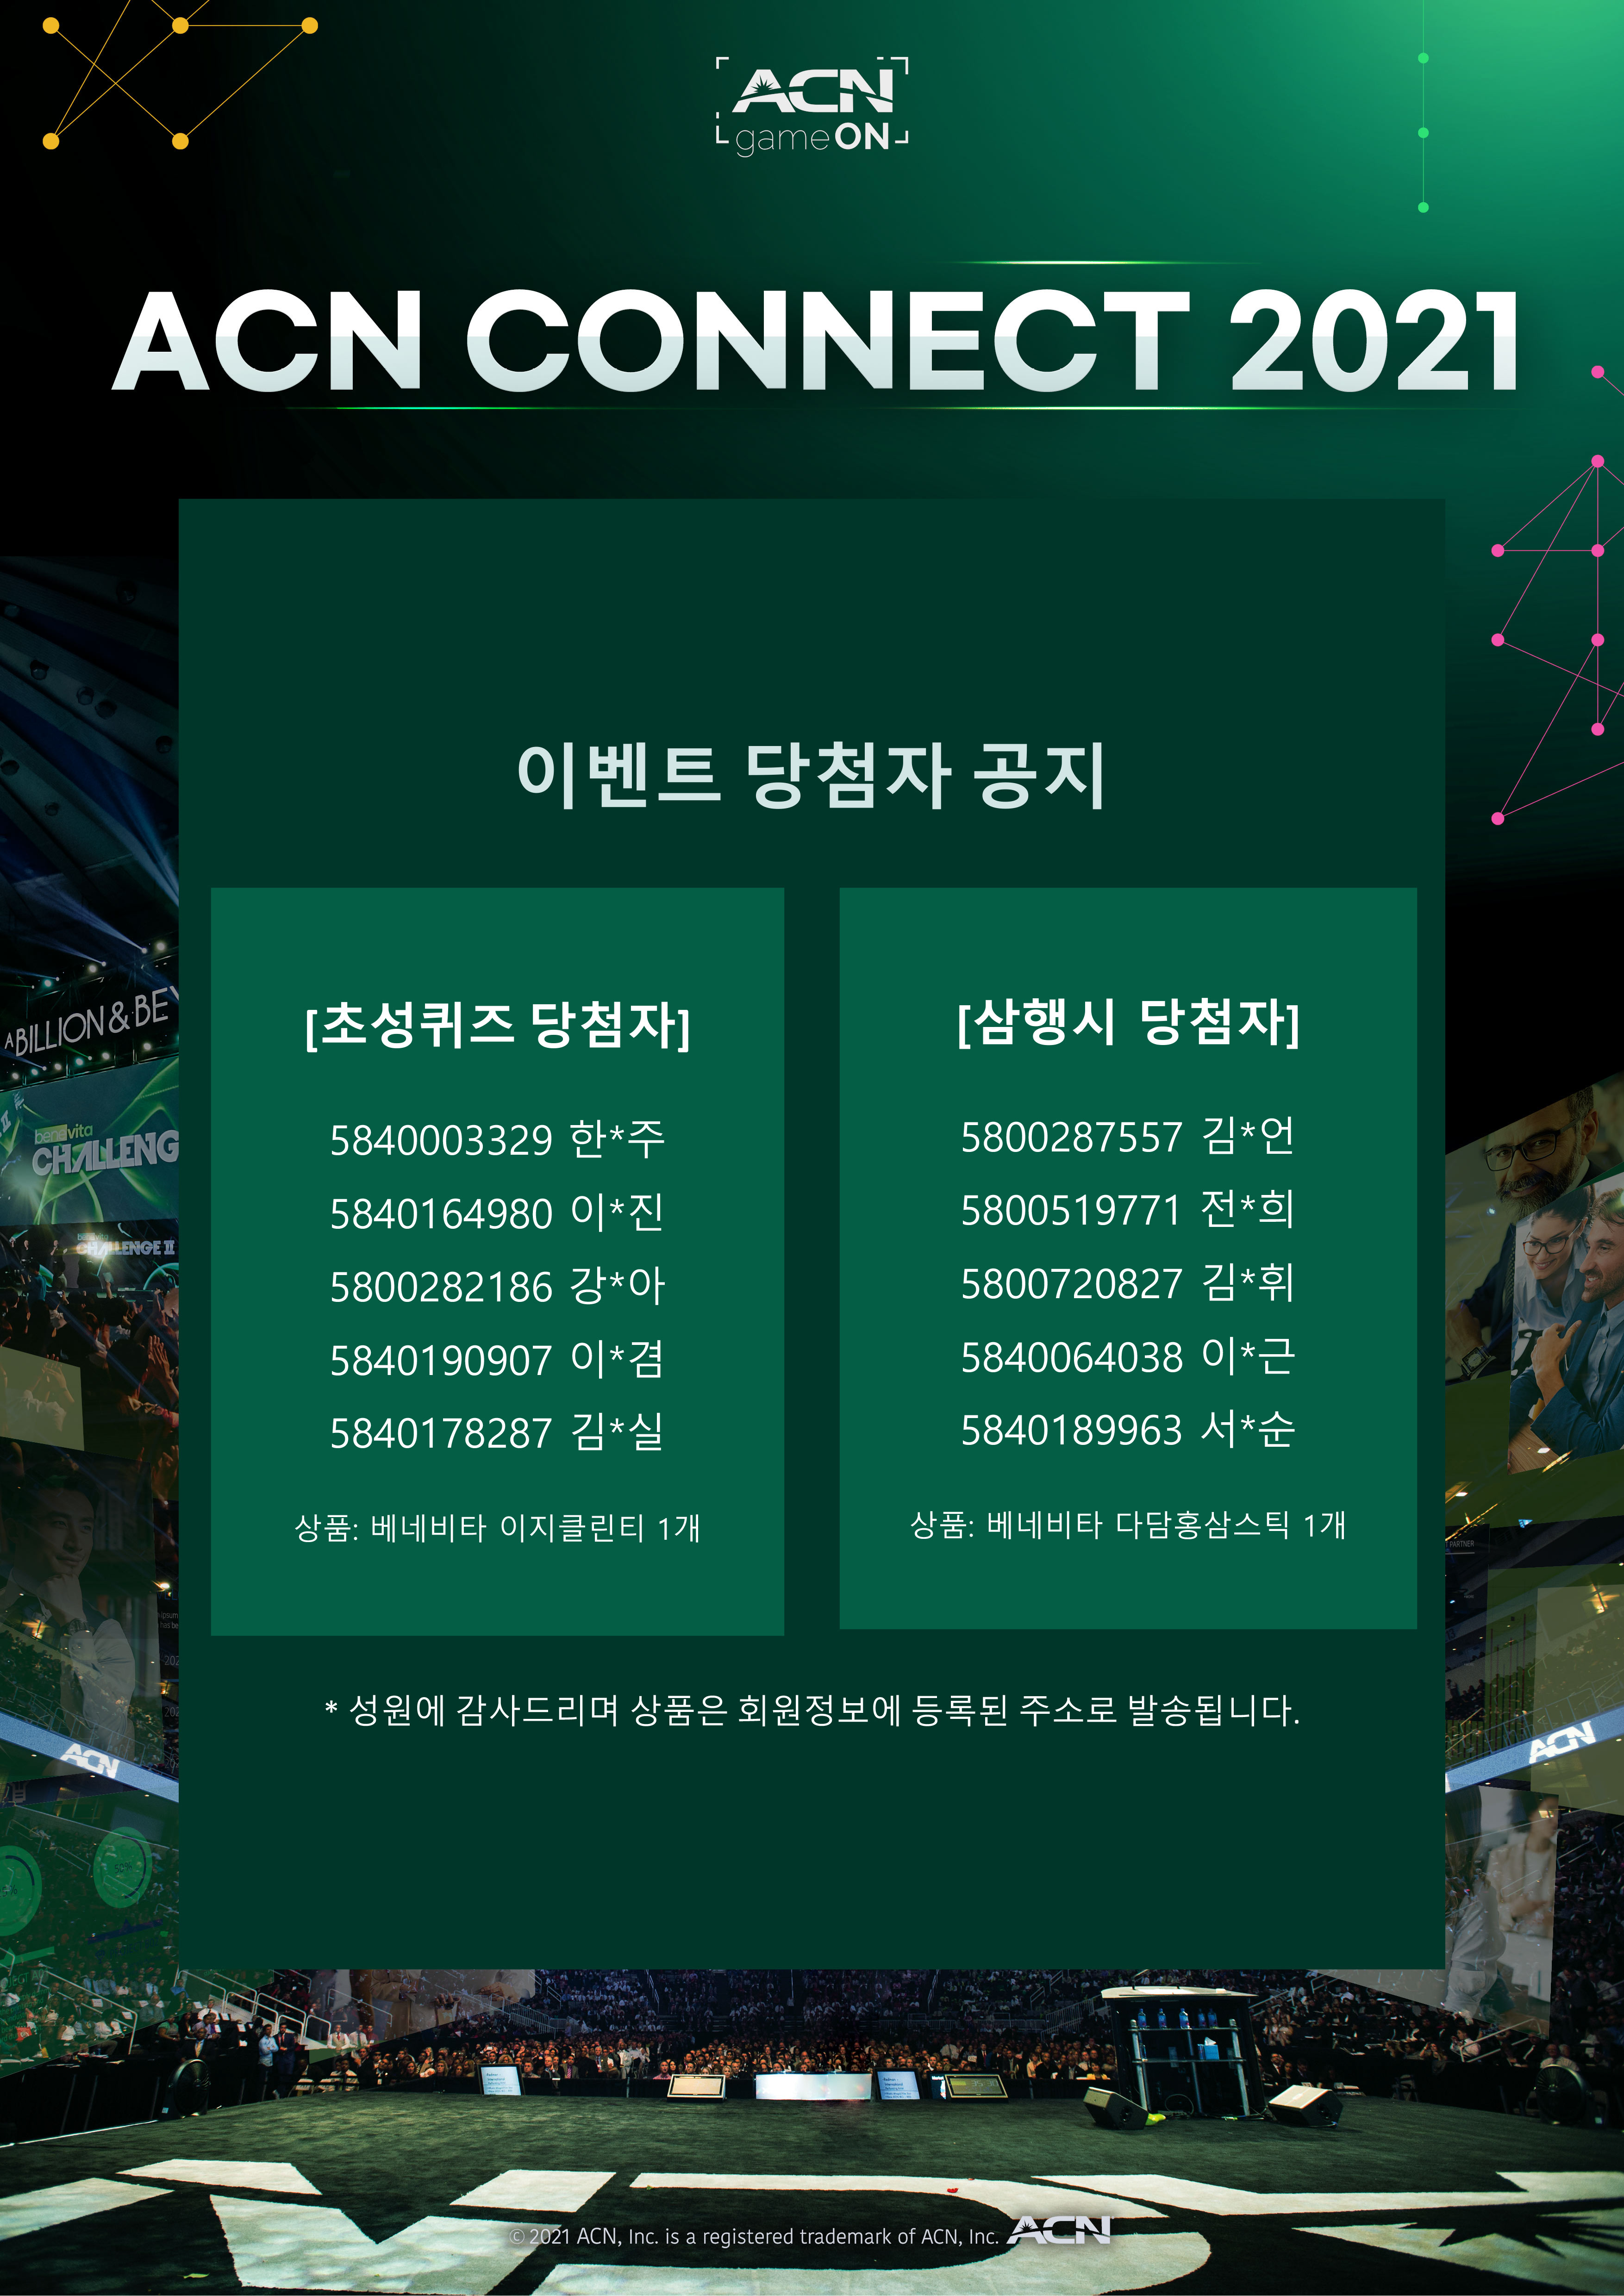 ACN Connect 2021 이벤트 당첨자 